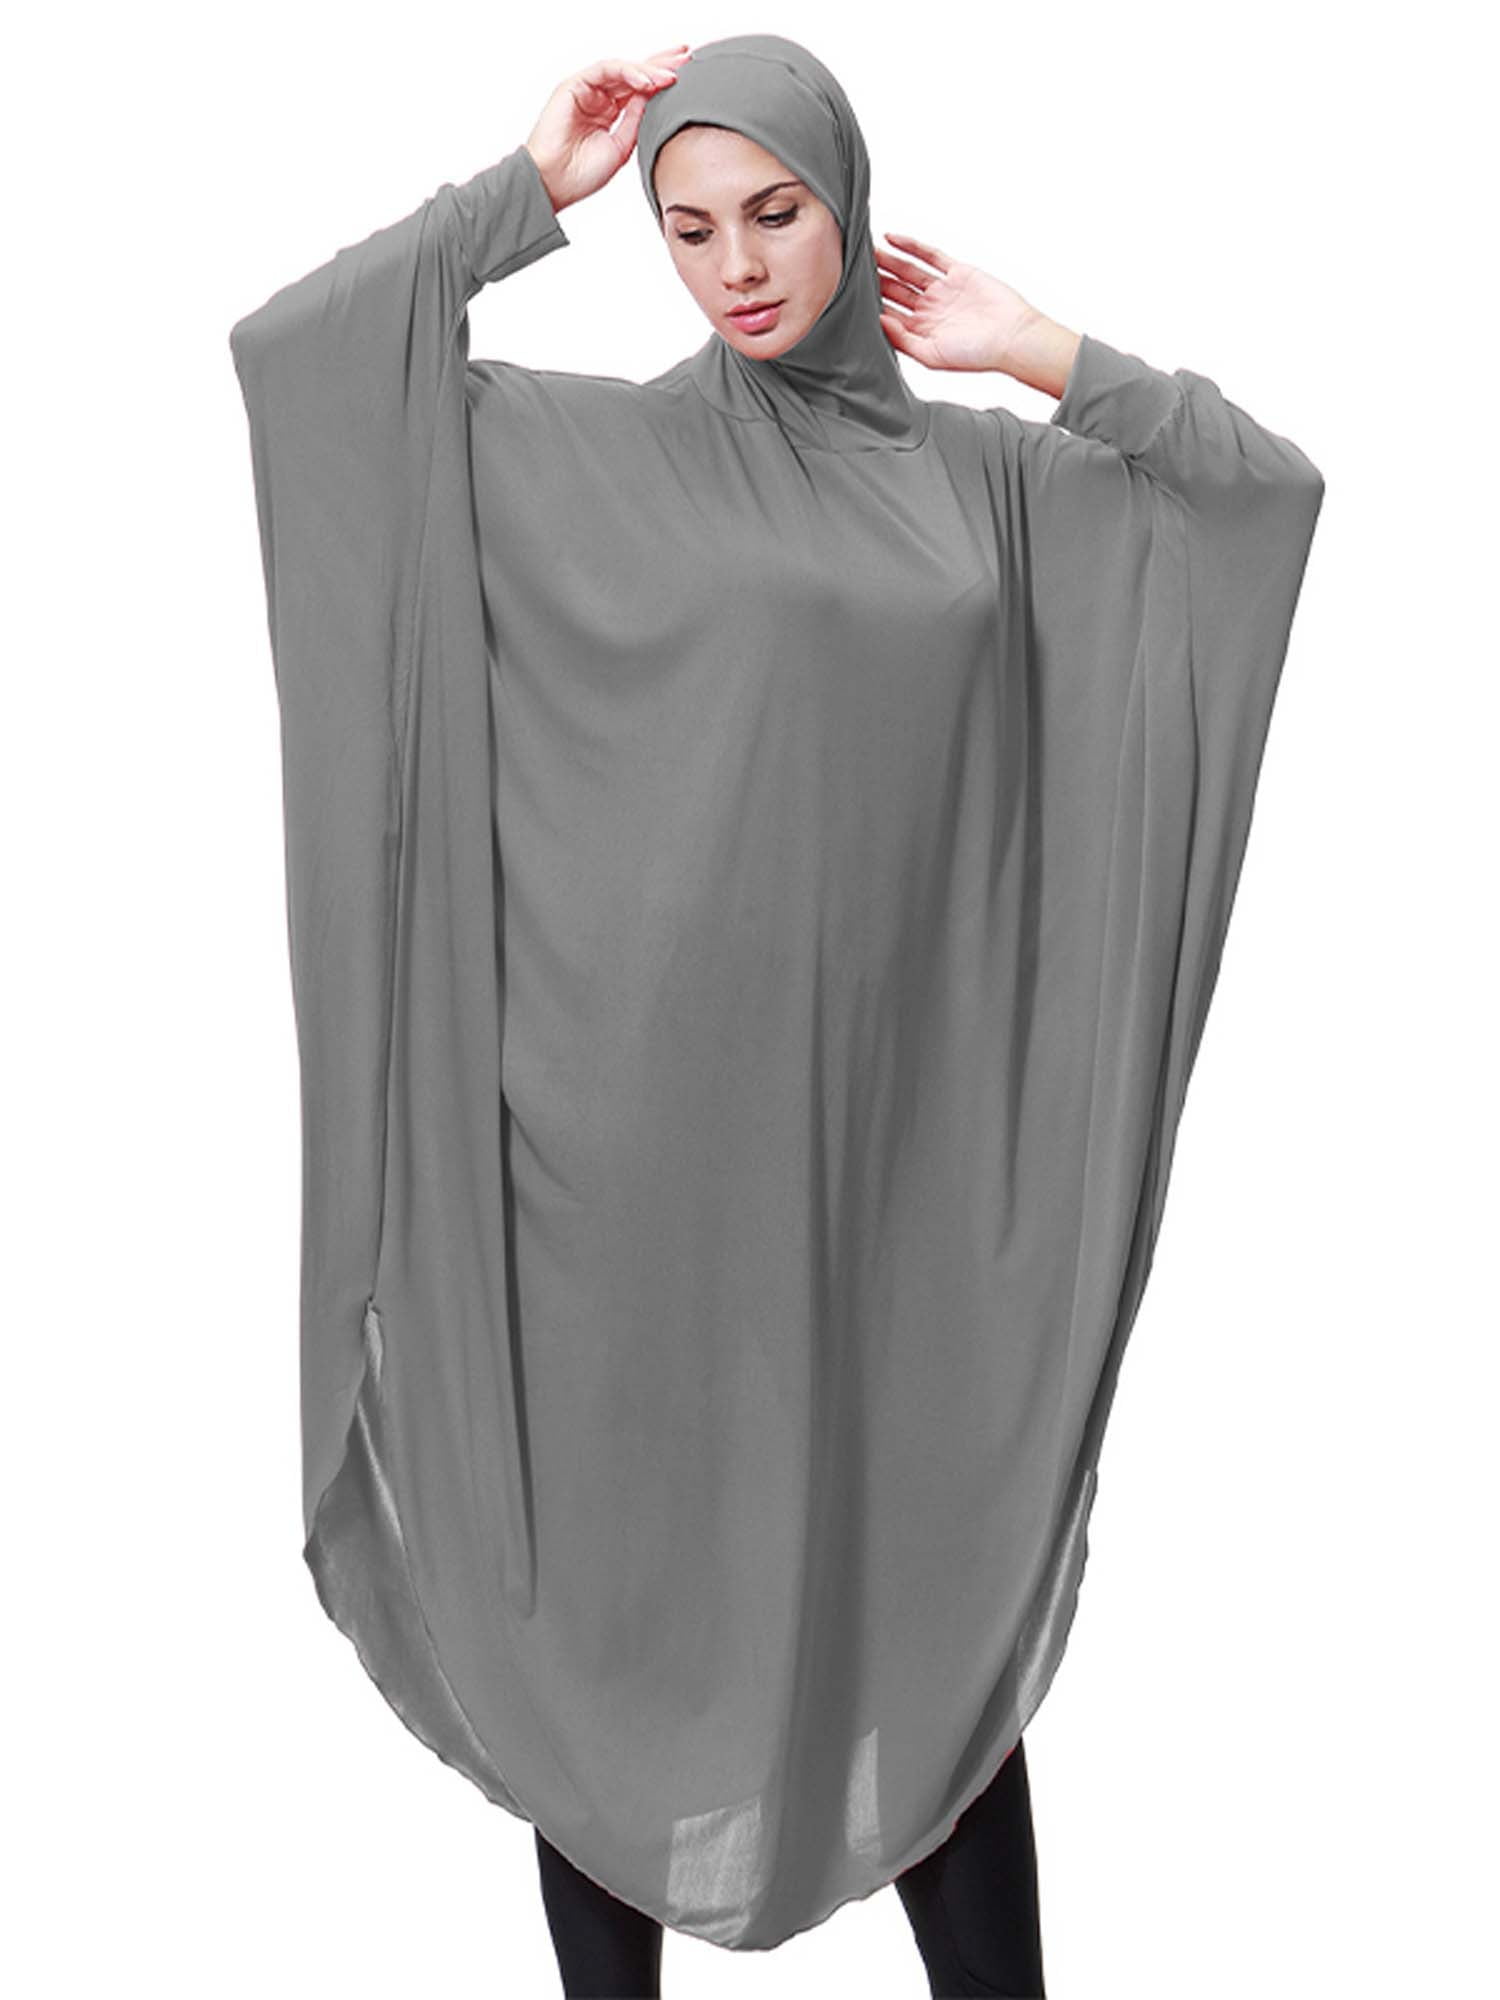 Details about   Muslim Women Khimar Hijab Jilbab Abaya Overhead Dress Prayer Niqab Burqa Robe 